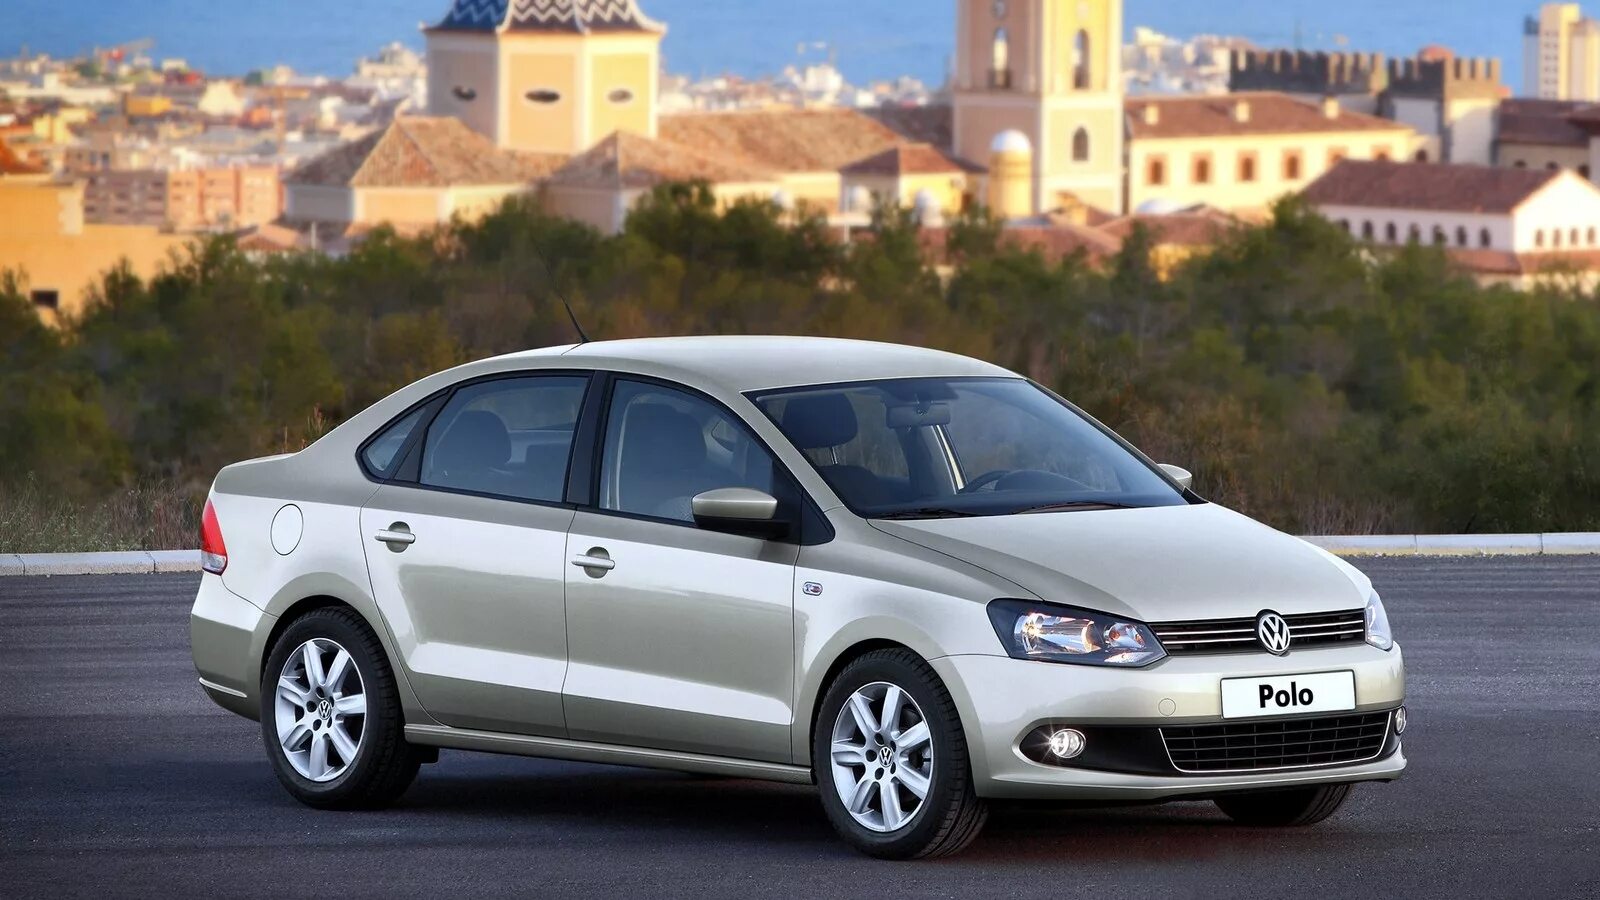 Автомобиль vw polo. Volkswagen Polo sedan. Volkswagen Polo sedan (2010). Фольксваген поло седан 2010. Volkswagen Polo 2010 седан.